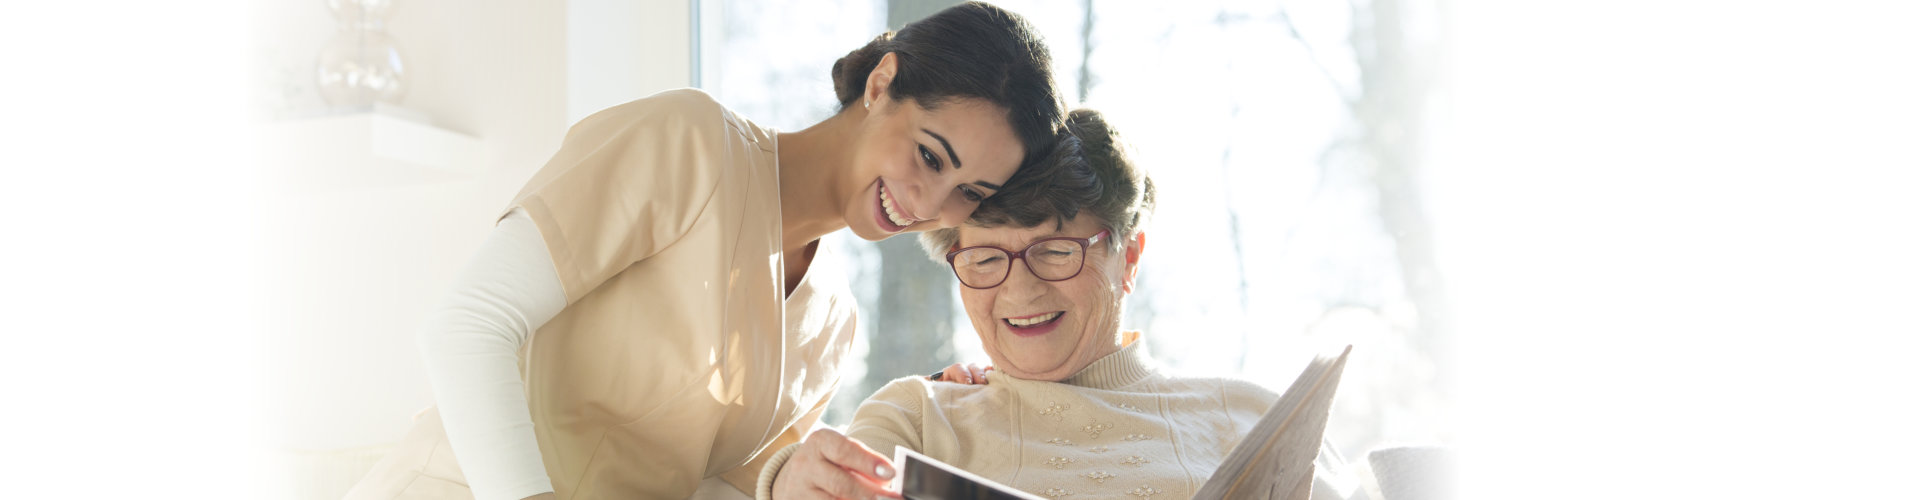 Smiling senior women watching photo album with happy caregiver